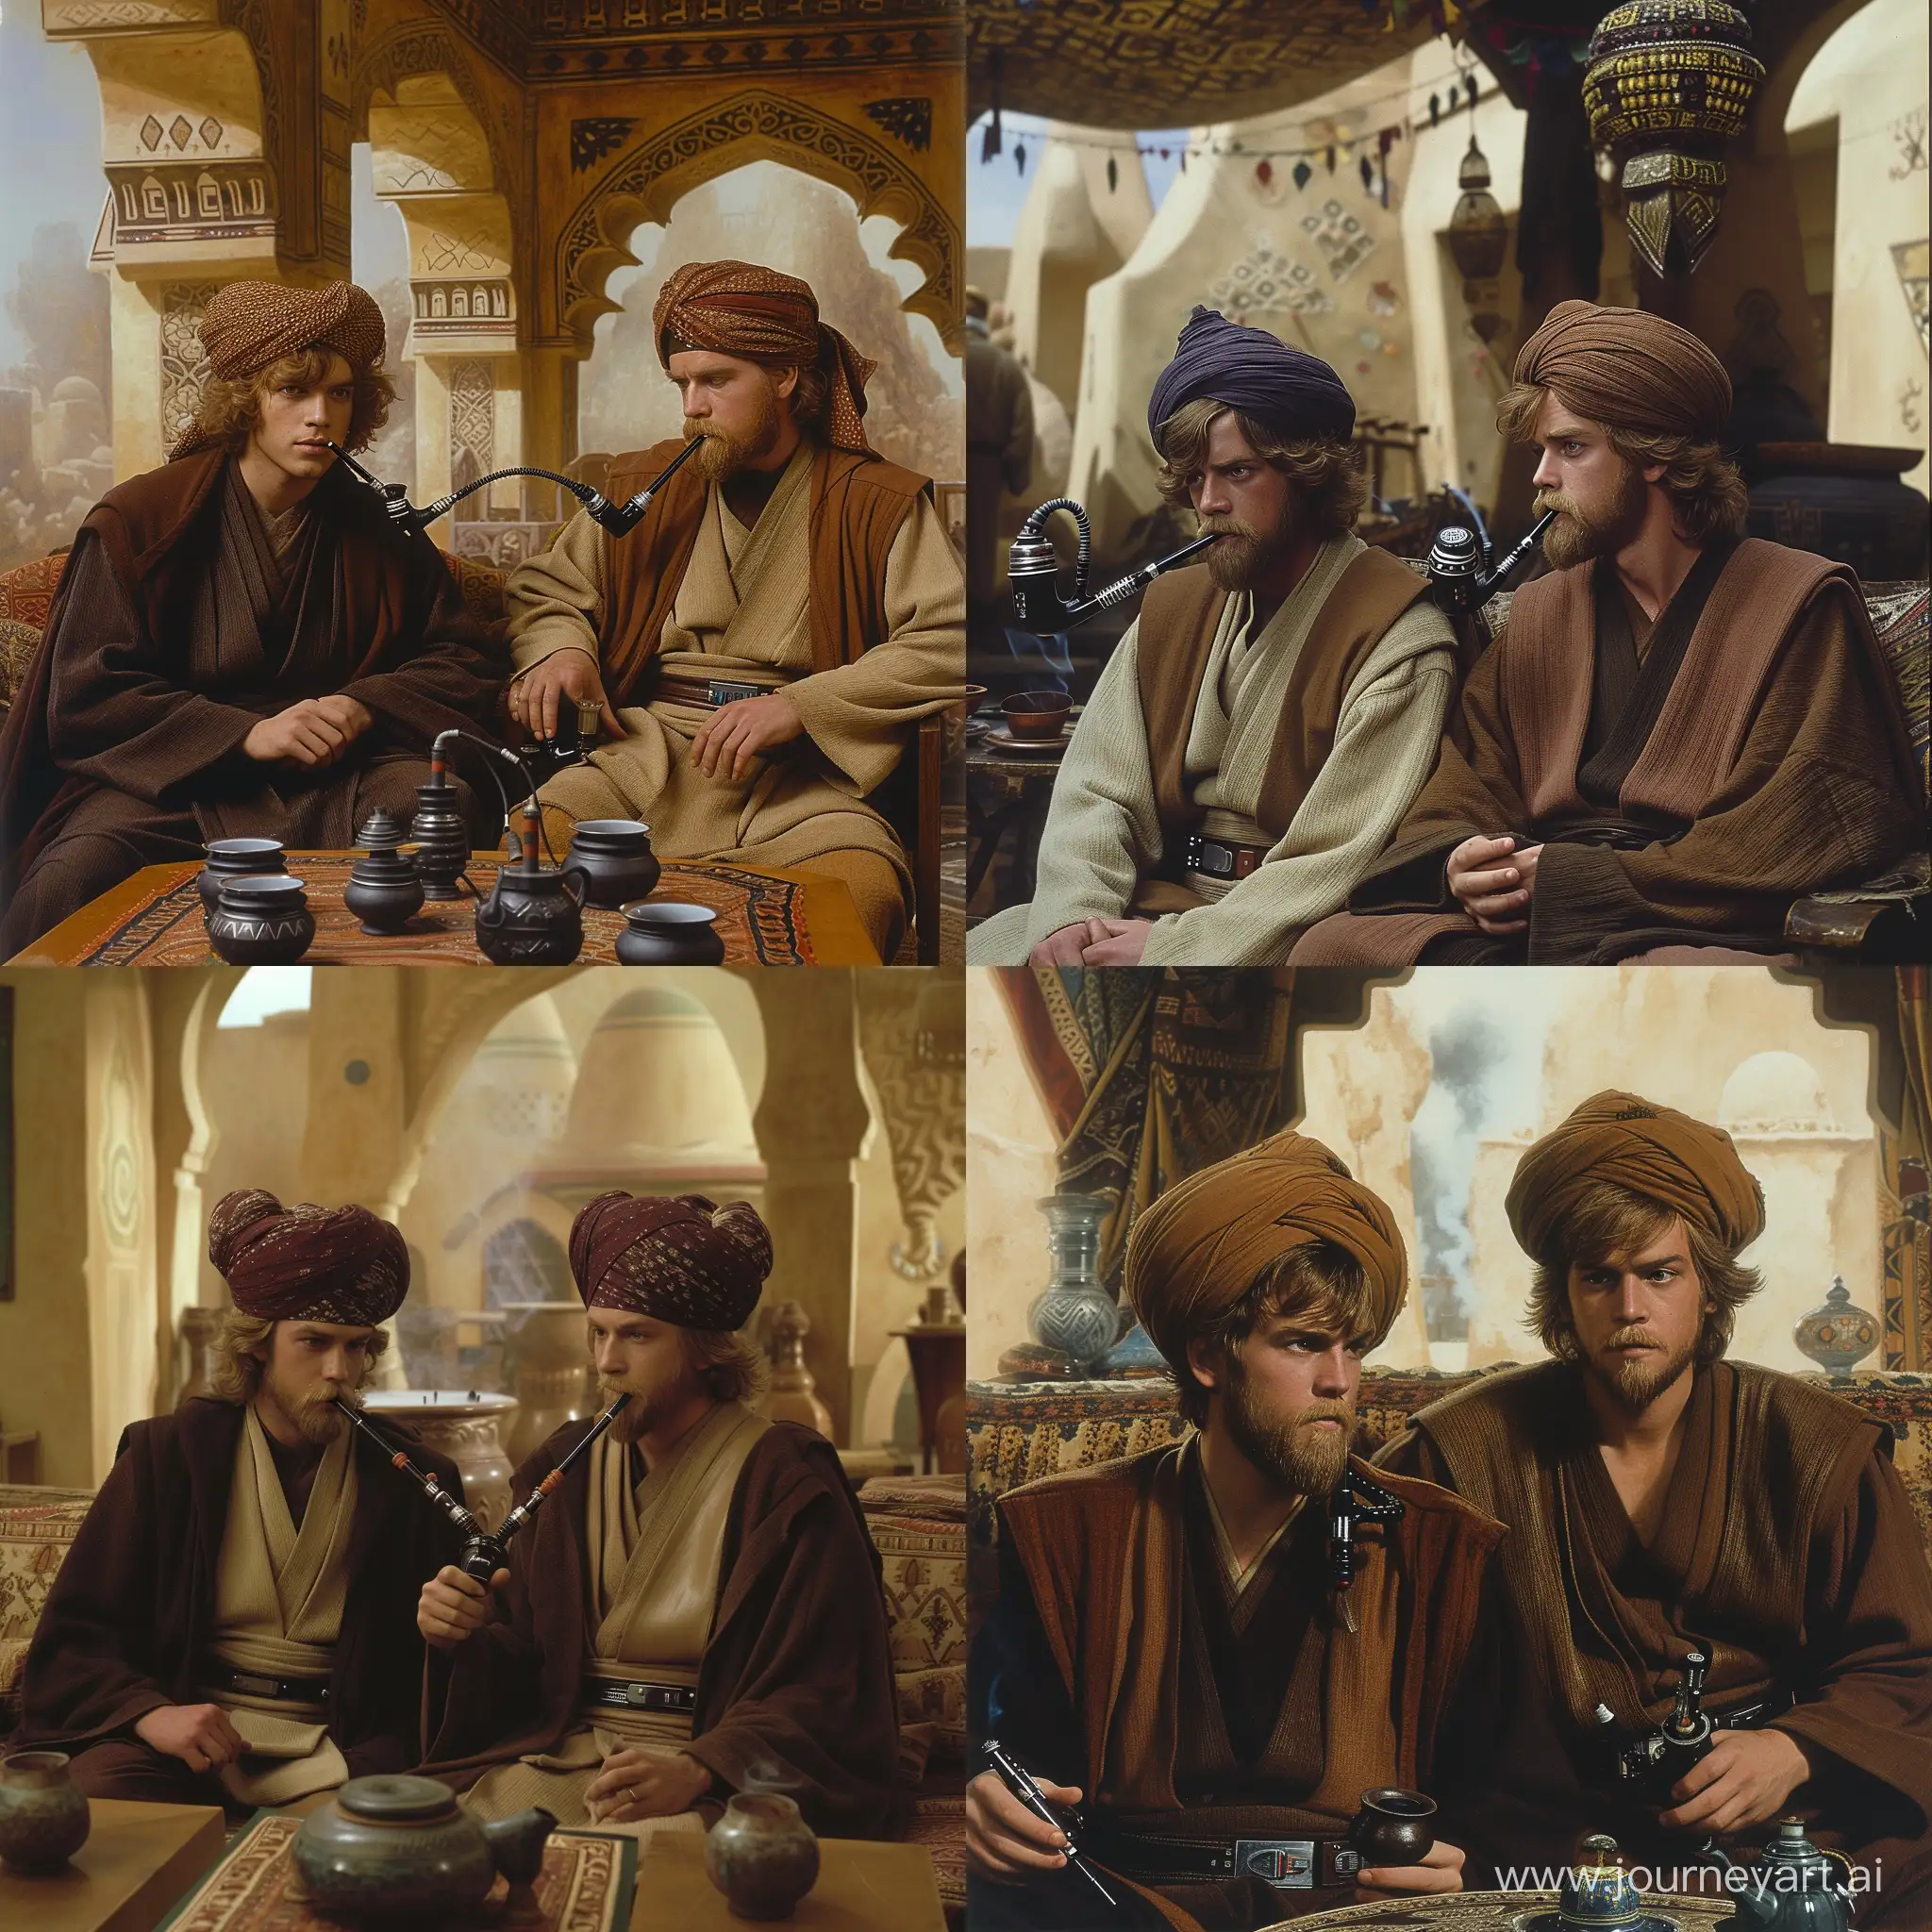 Anakin-Skywalker-and-ObiWan-Kenobi-Enjoying-Hookah-Pipes-in-a-Teahouse